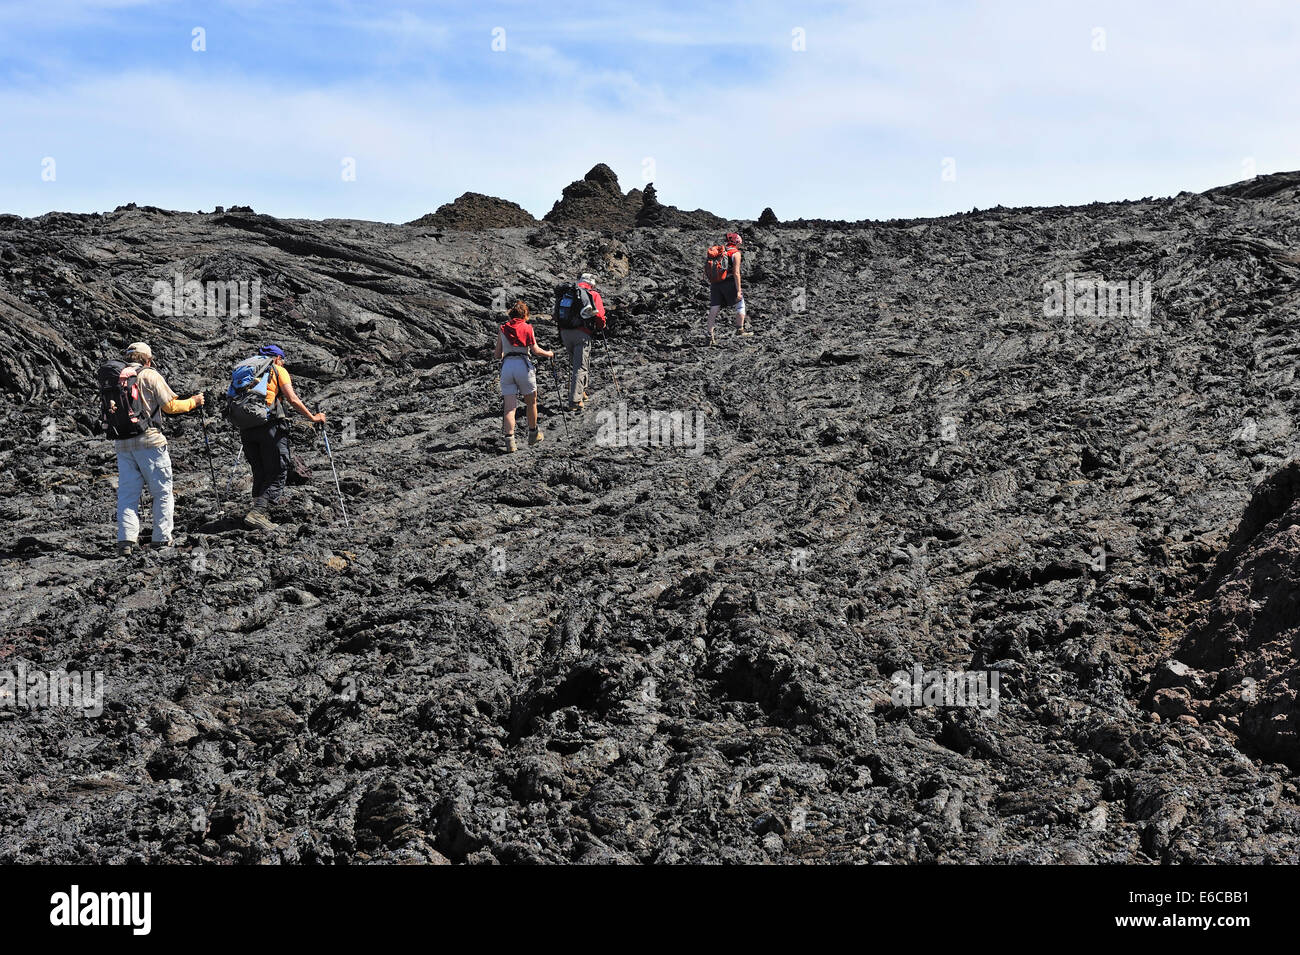 Gruppe von Wanderern zu Fuß auf gekühlte Lava, Vulkan Mauna Loa, Big Island, Hawaii Volcanoes Nationalpark, USA Stockfoto